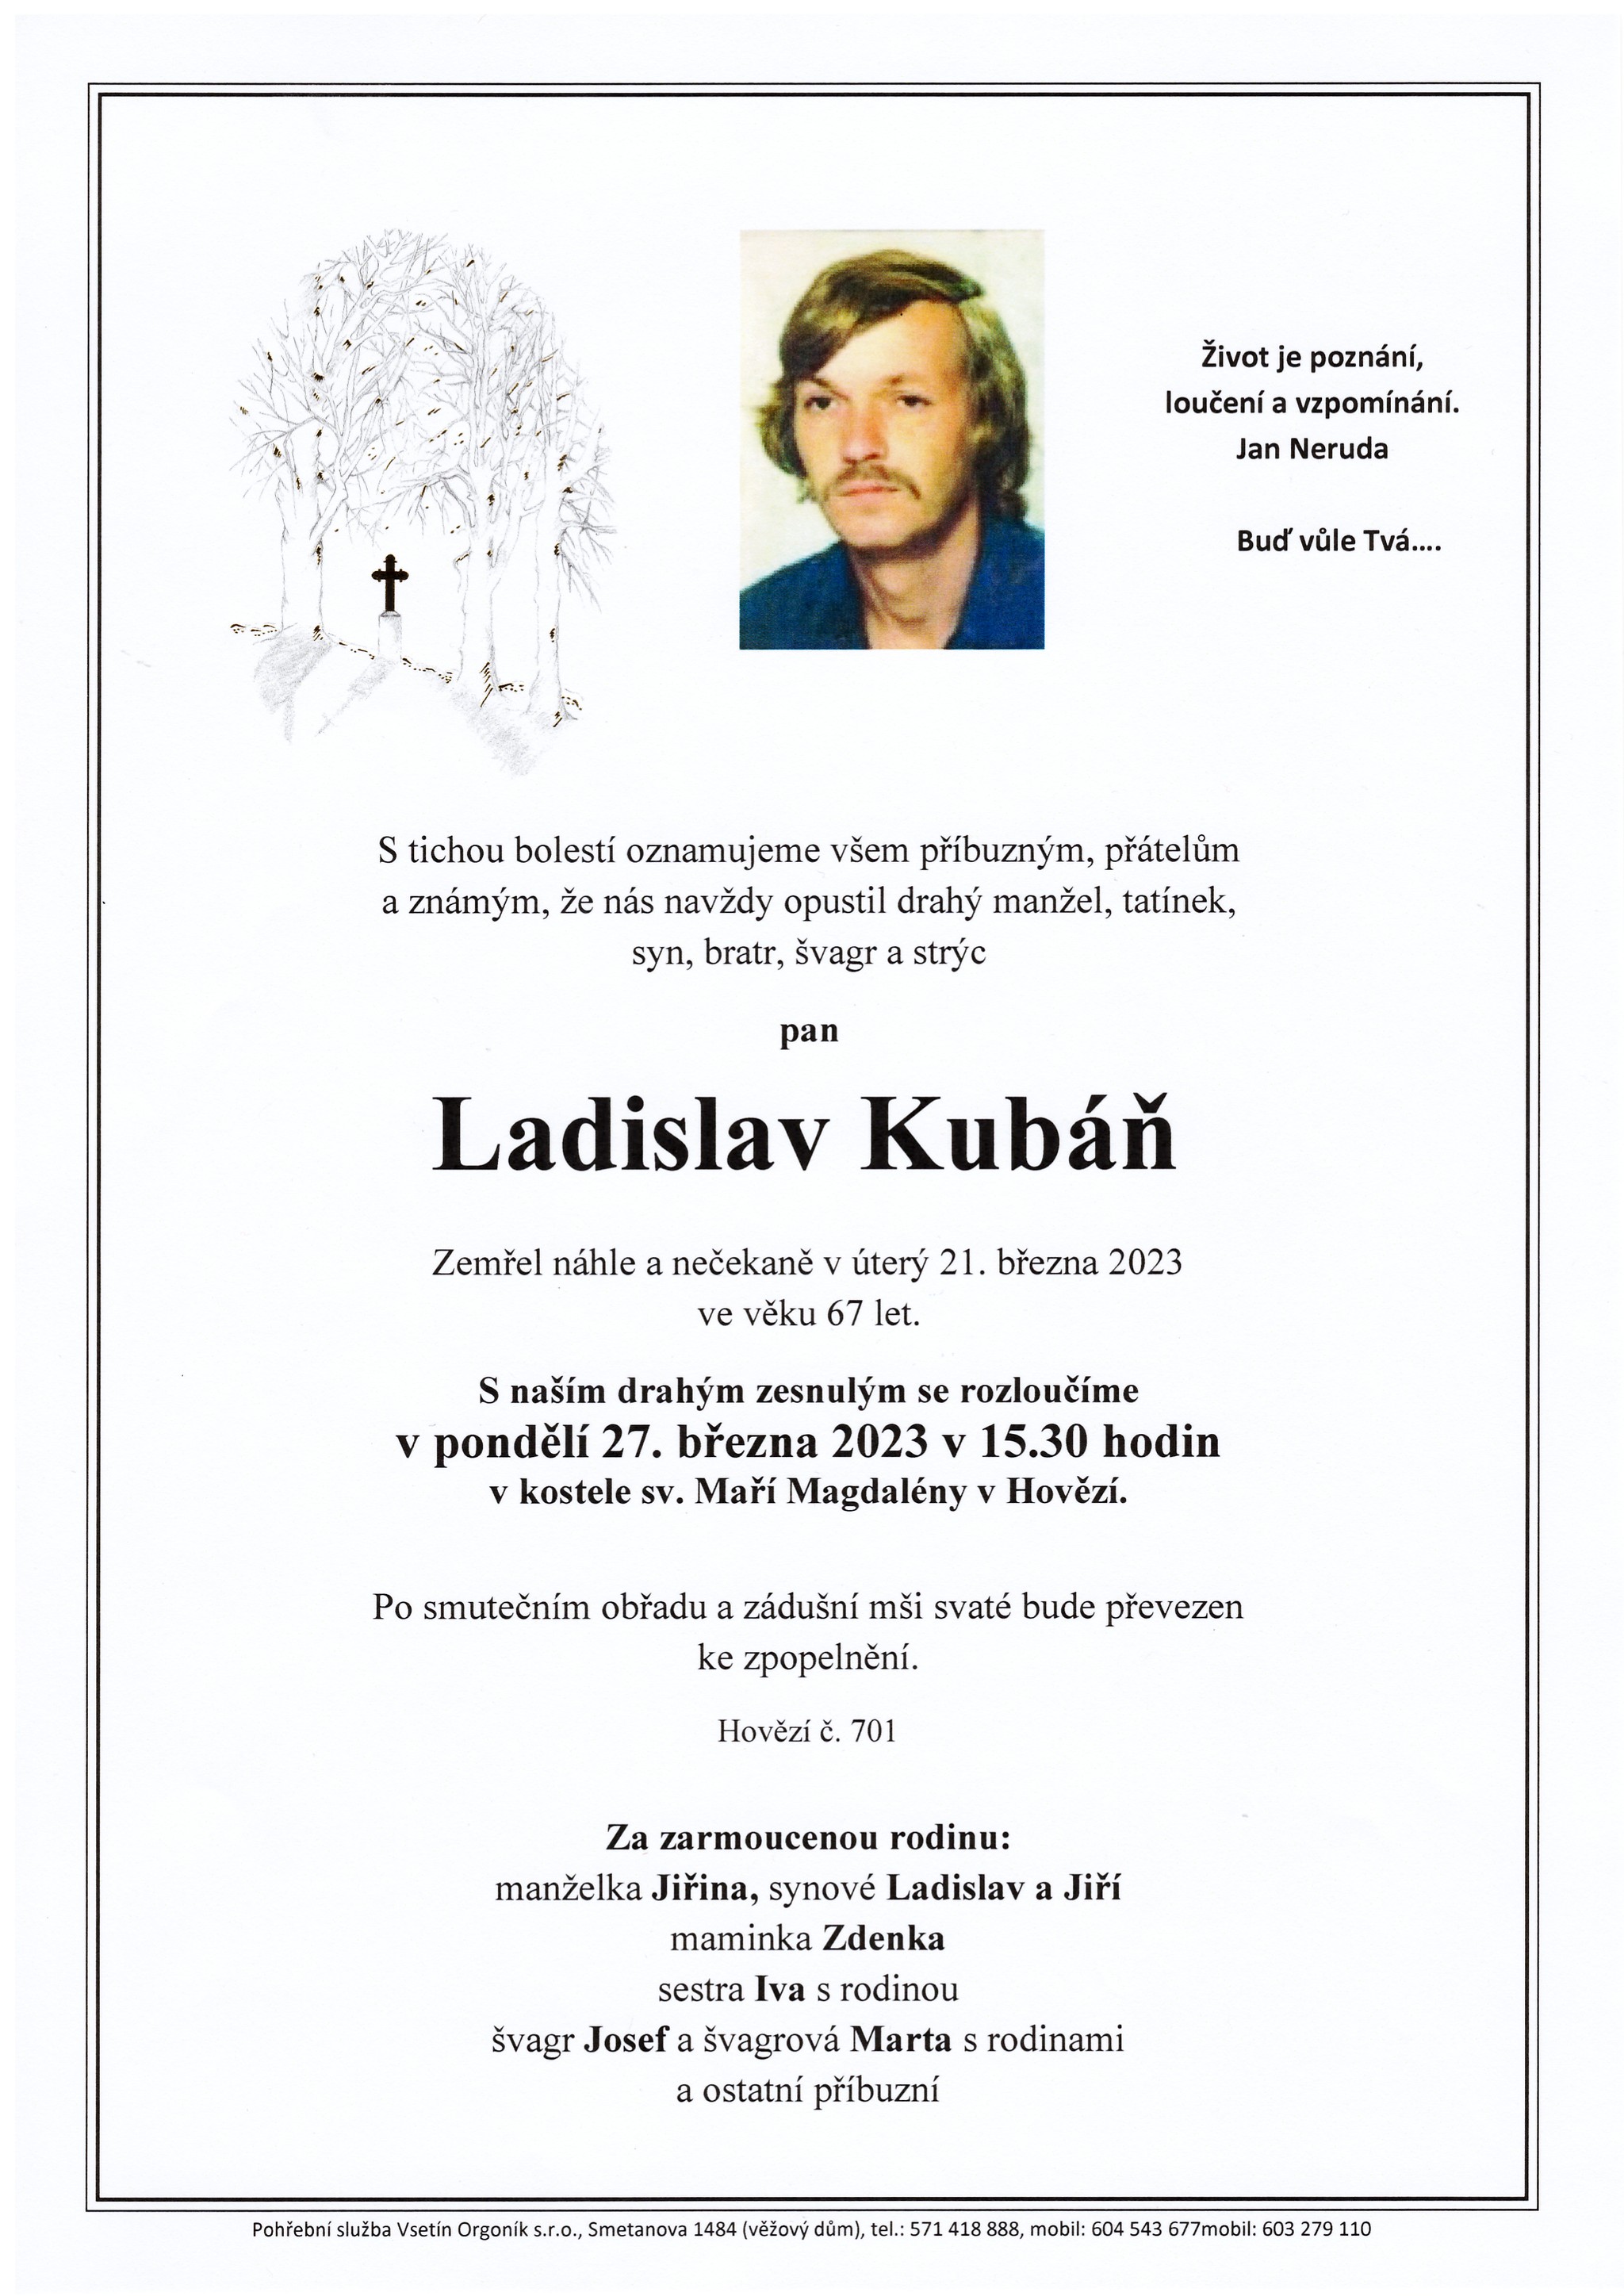 Ladislav Kubáň